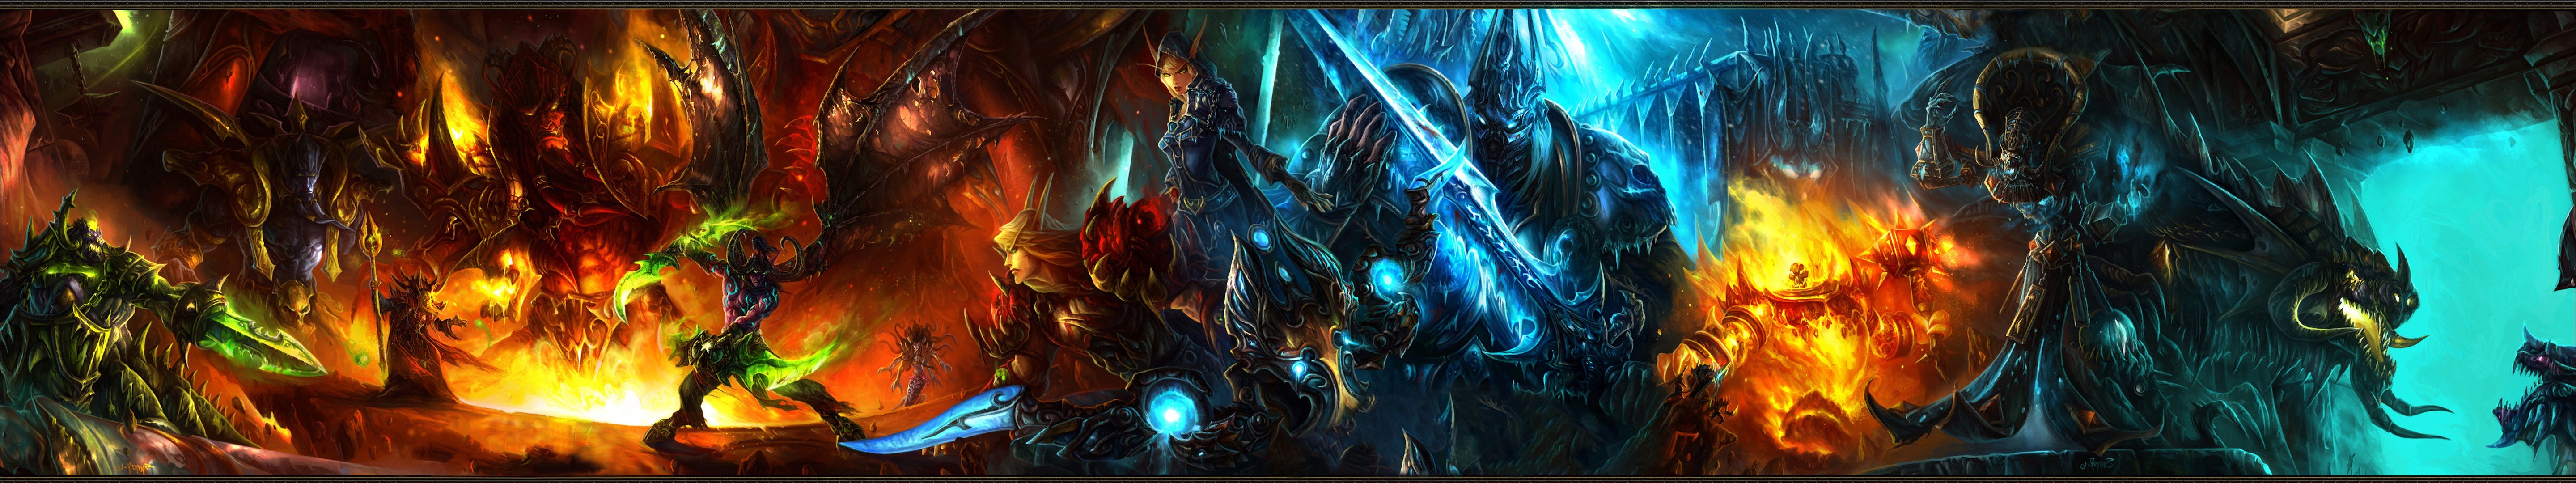 weapon Sword Fantasy Art Warcraft World Of Warcraft 